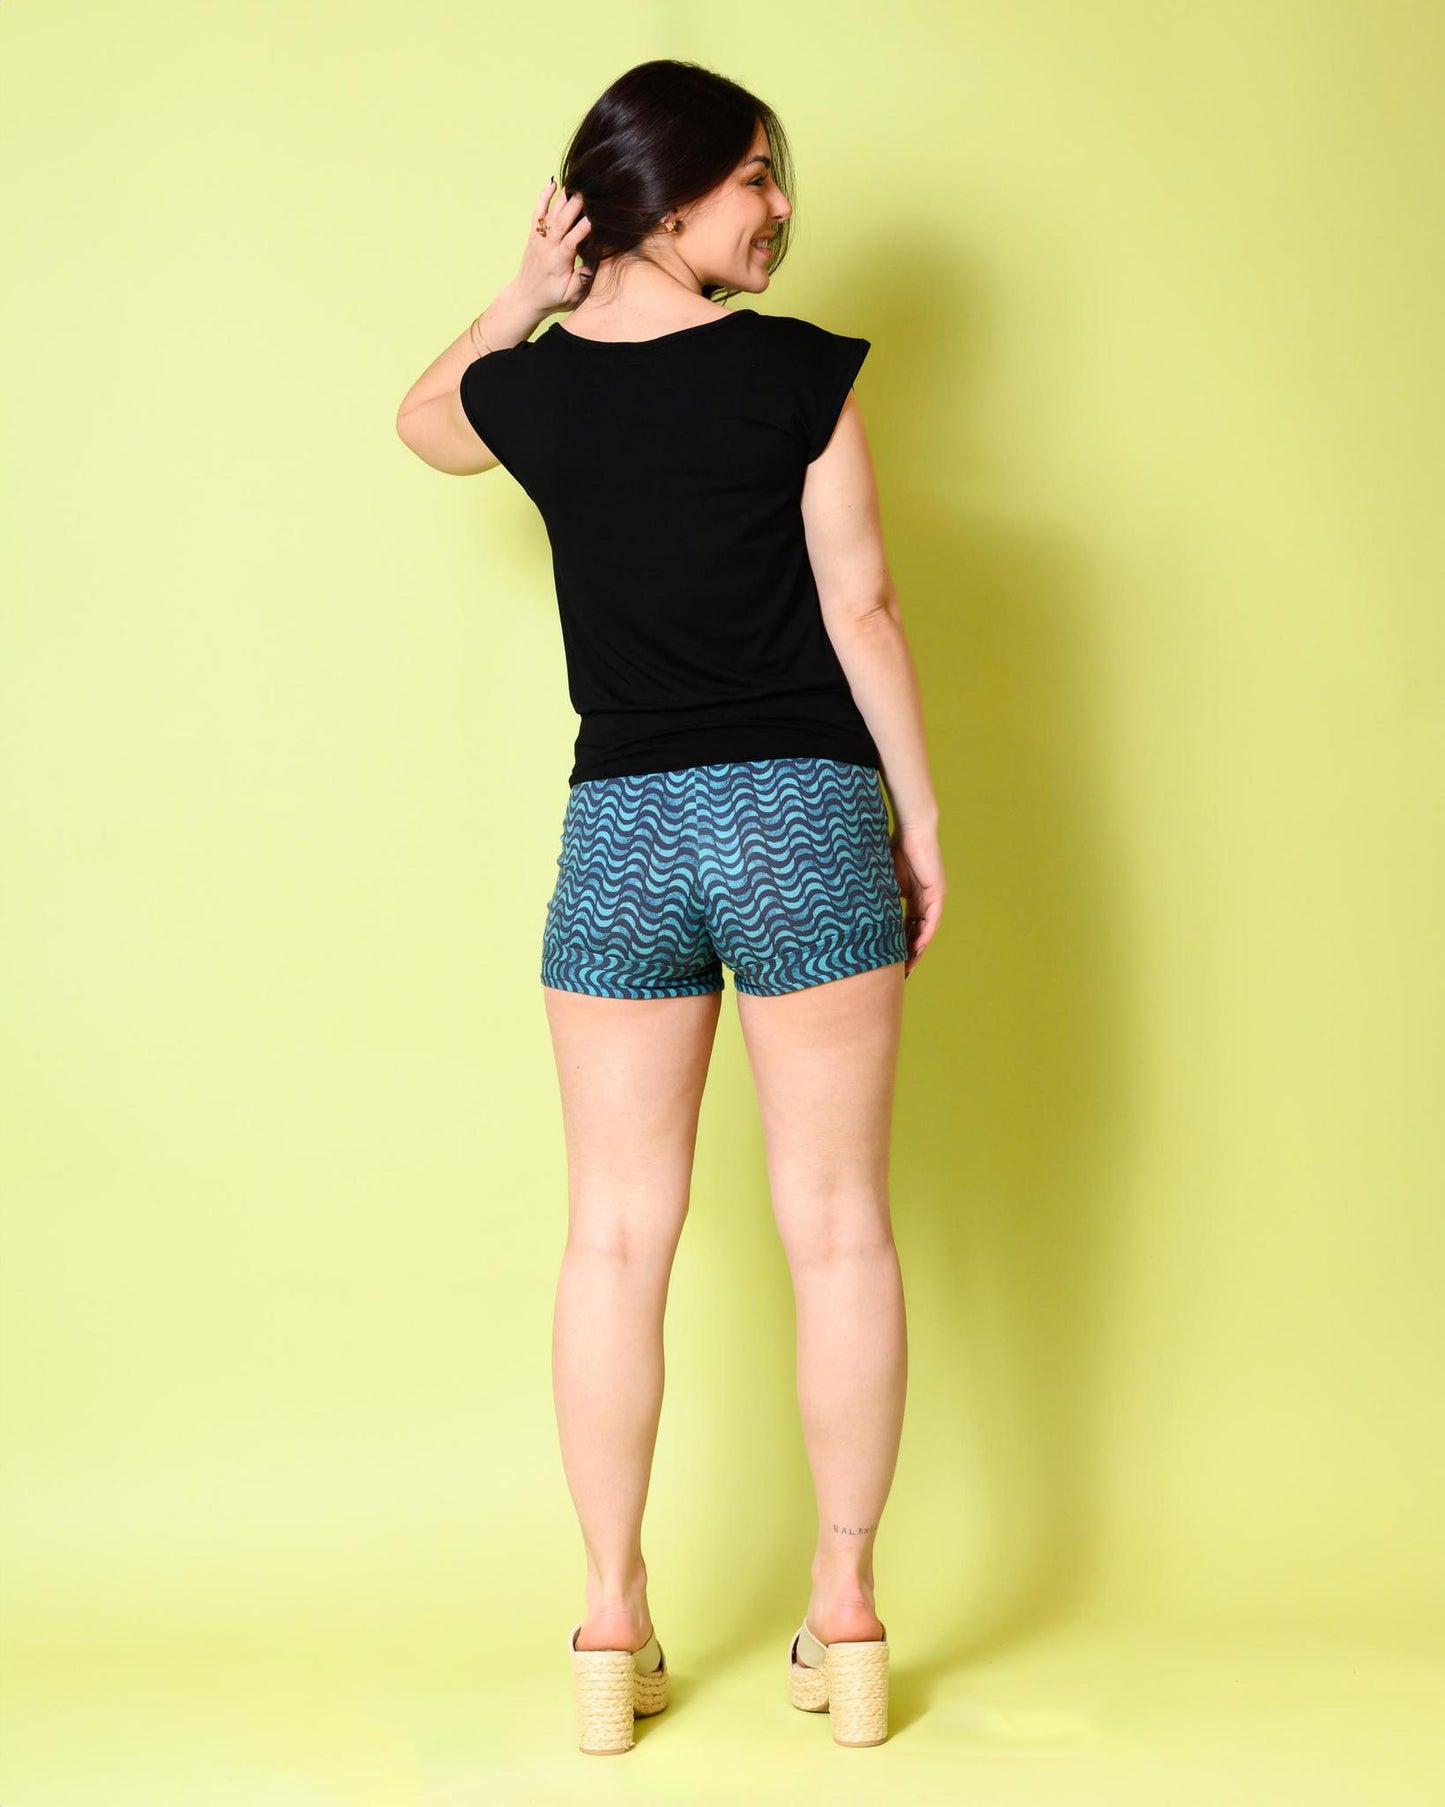 Squasht Short Shorts in Turquoise Crescent Moons